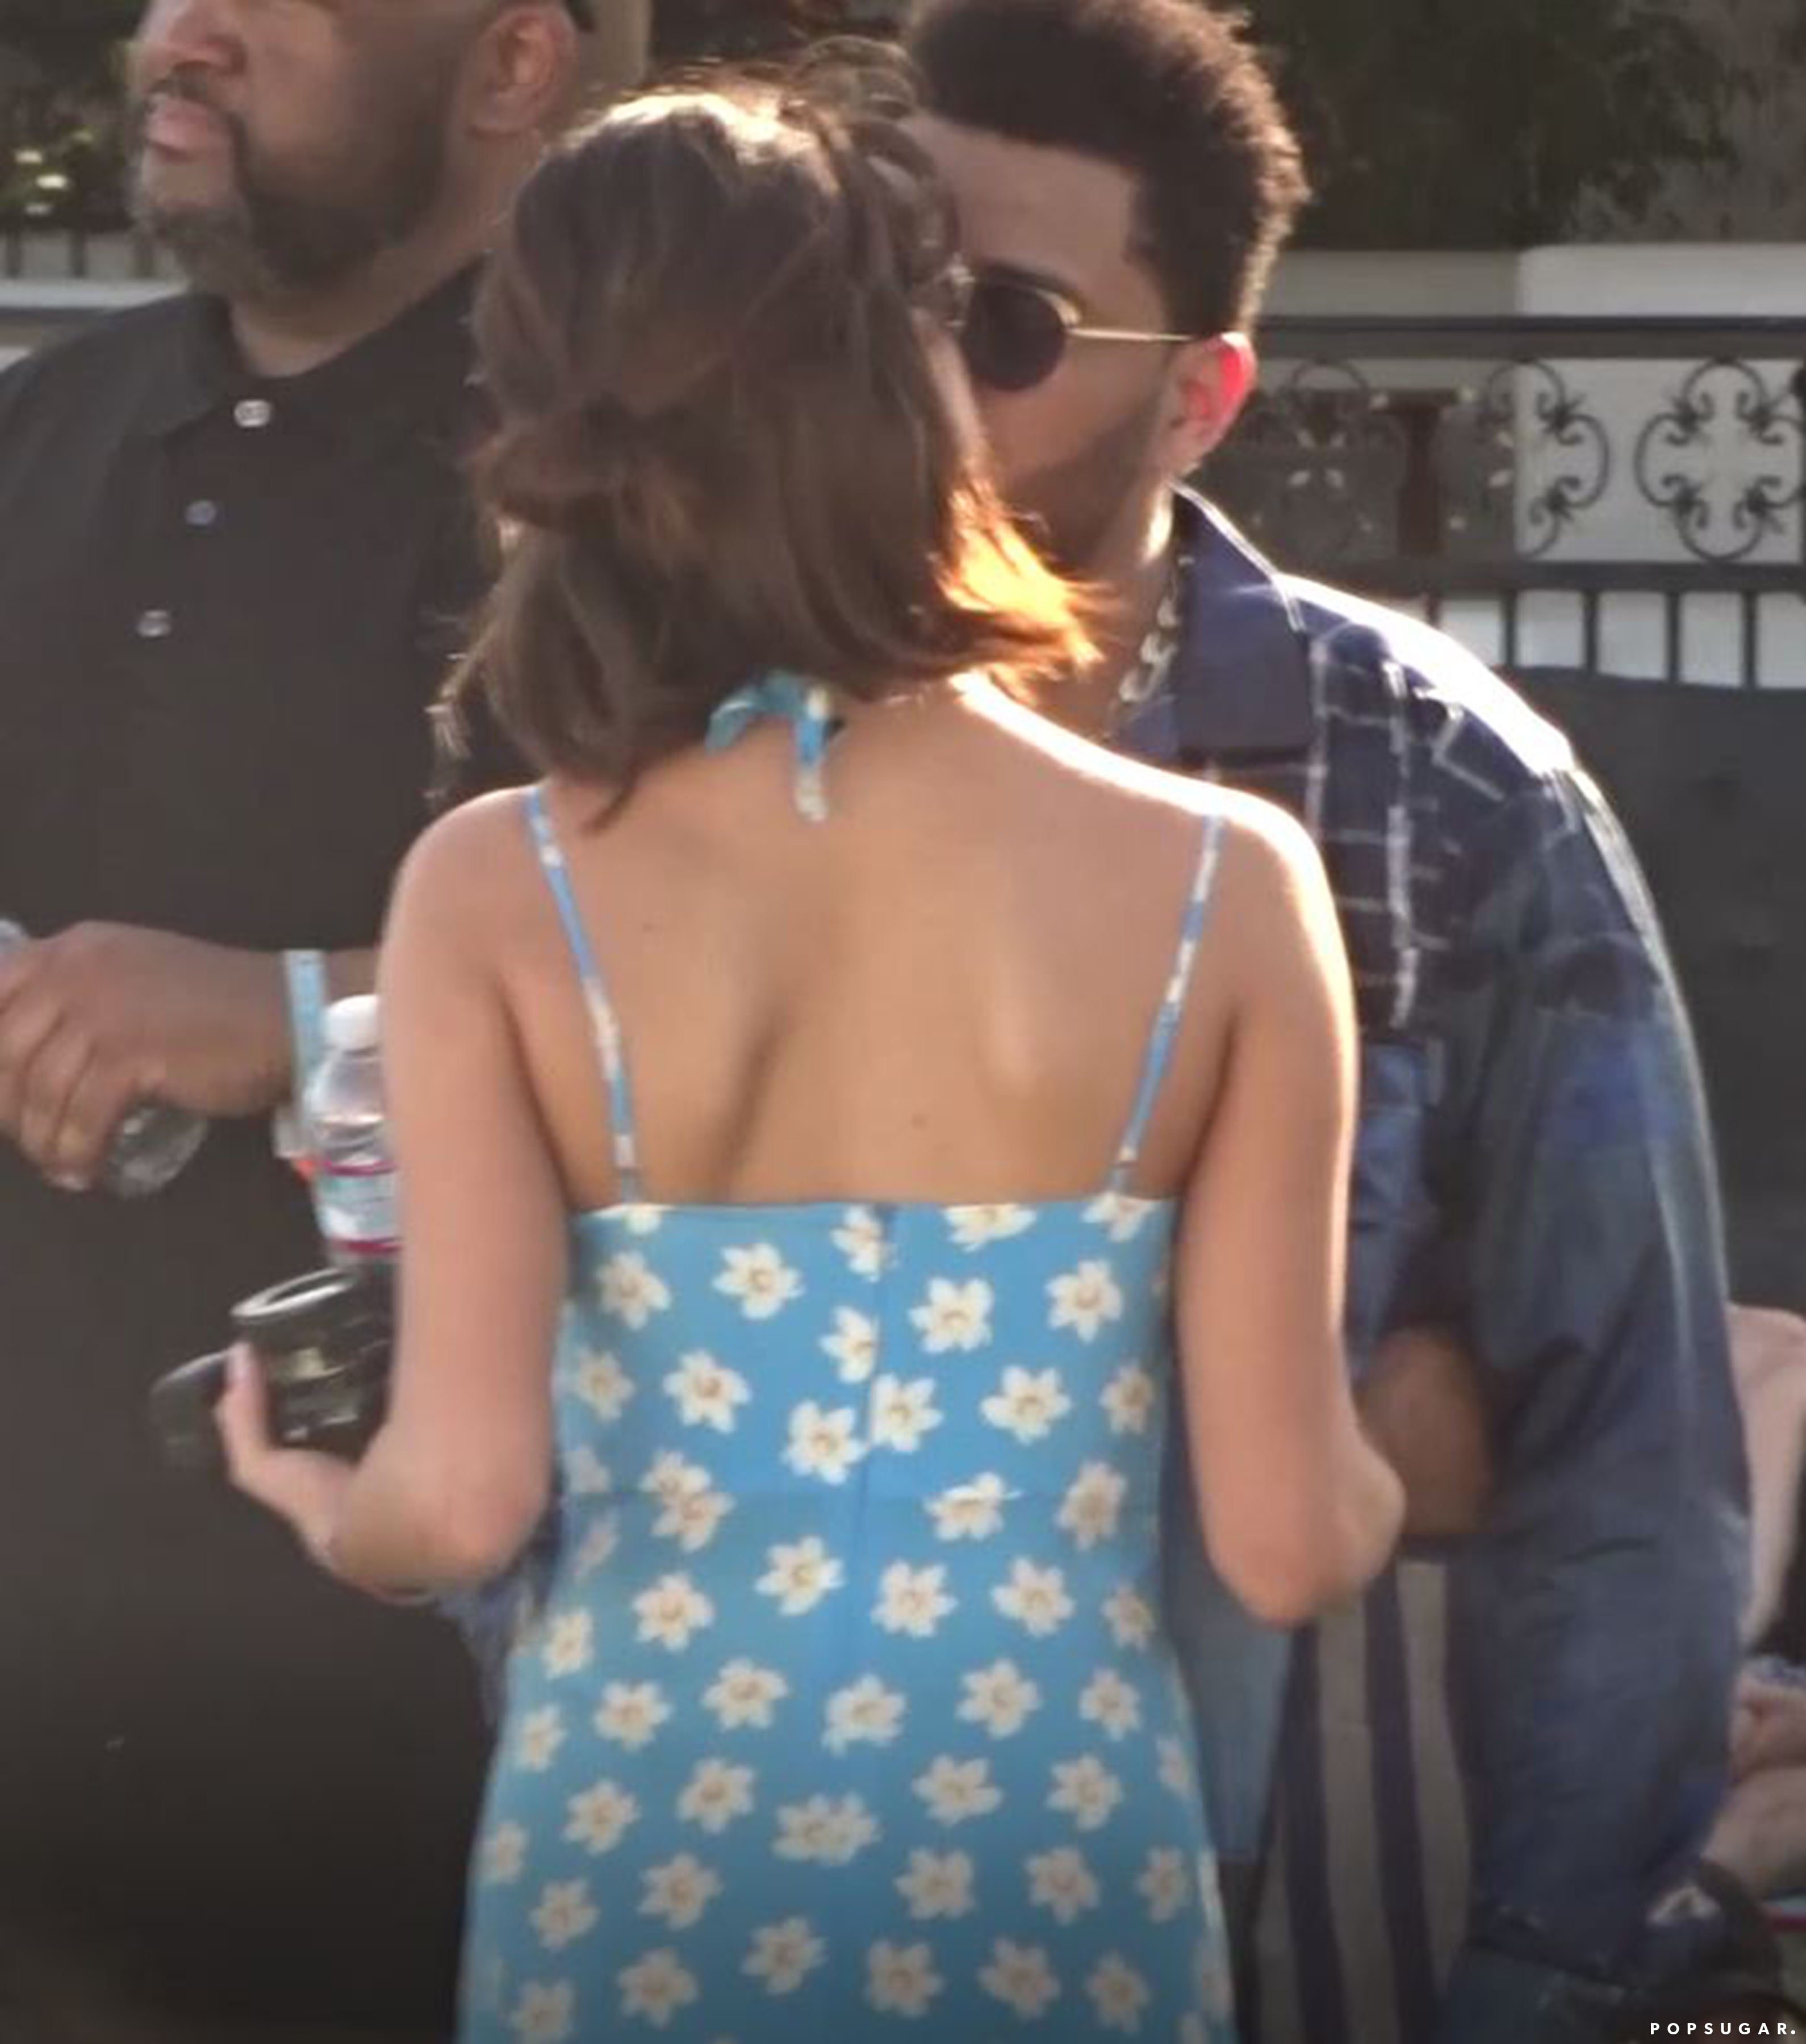 The Weeknd Coachella With Selena Gomez April 15, 2017 – Star Style Man